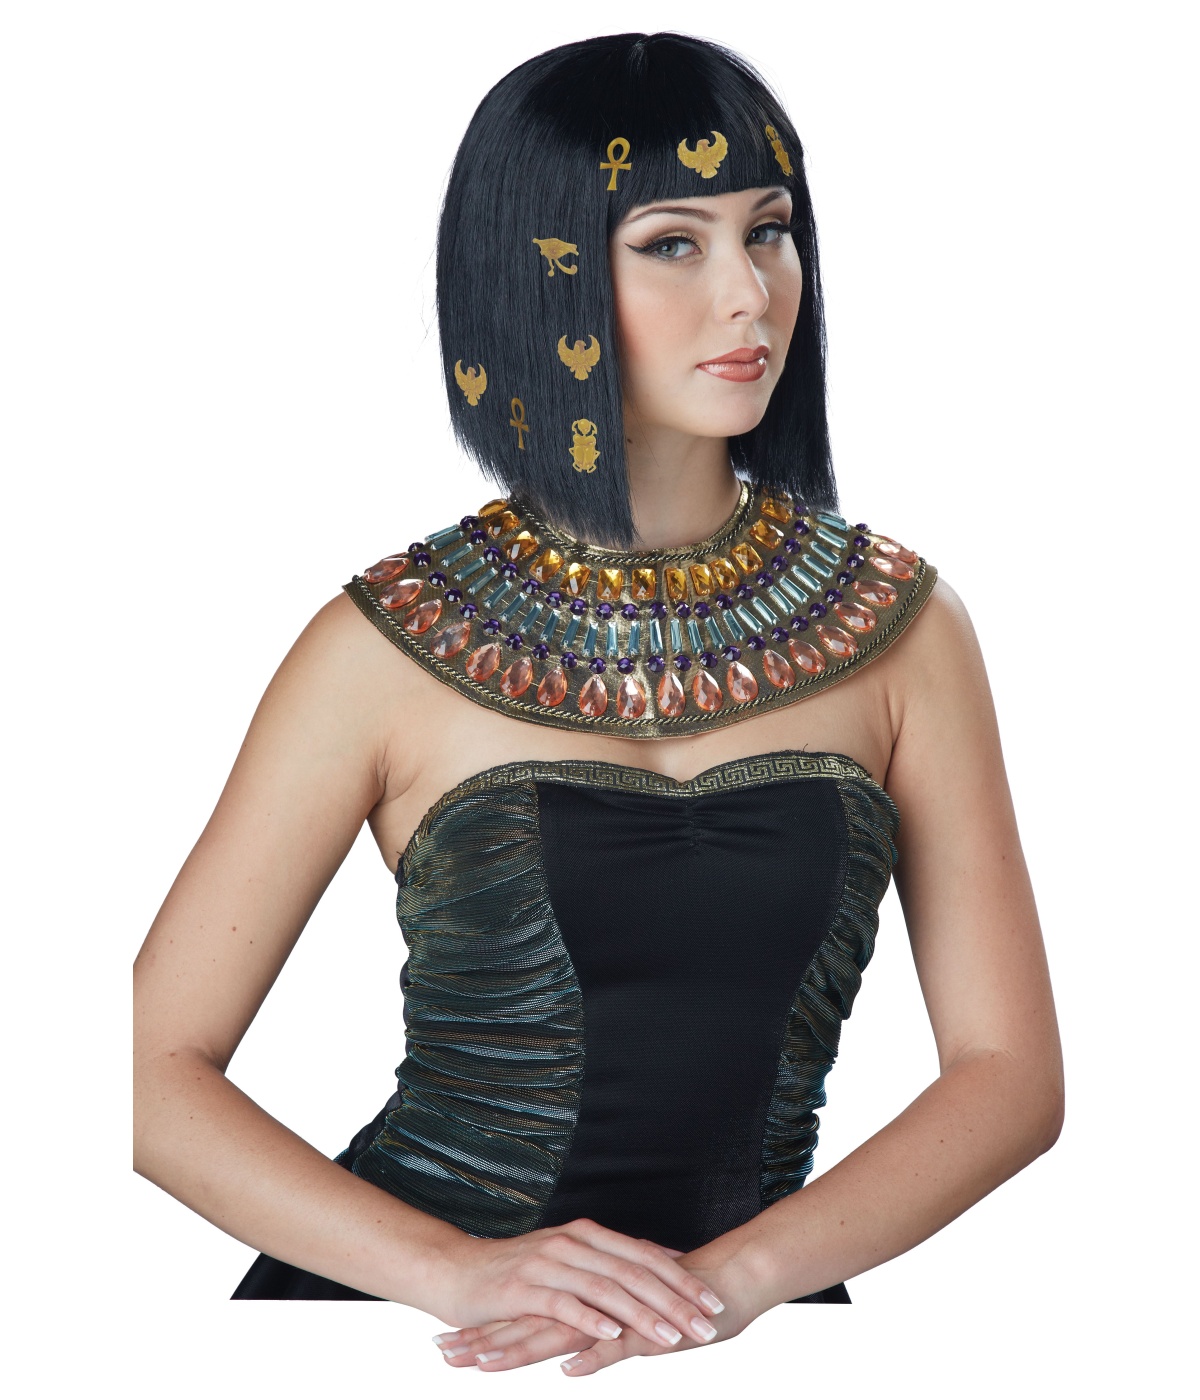  Hairoglyphics Egyptian Decorated Black Wig